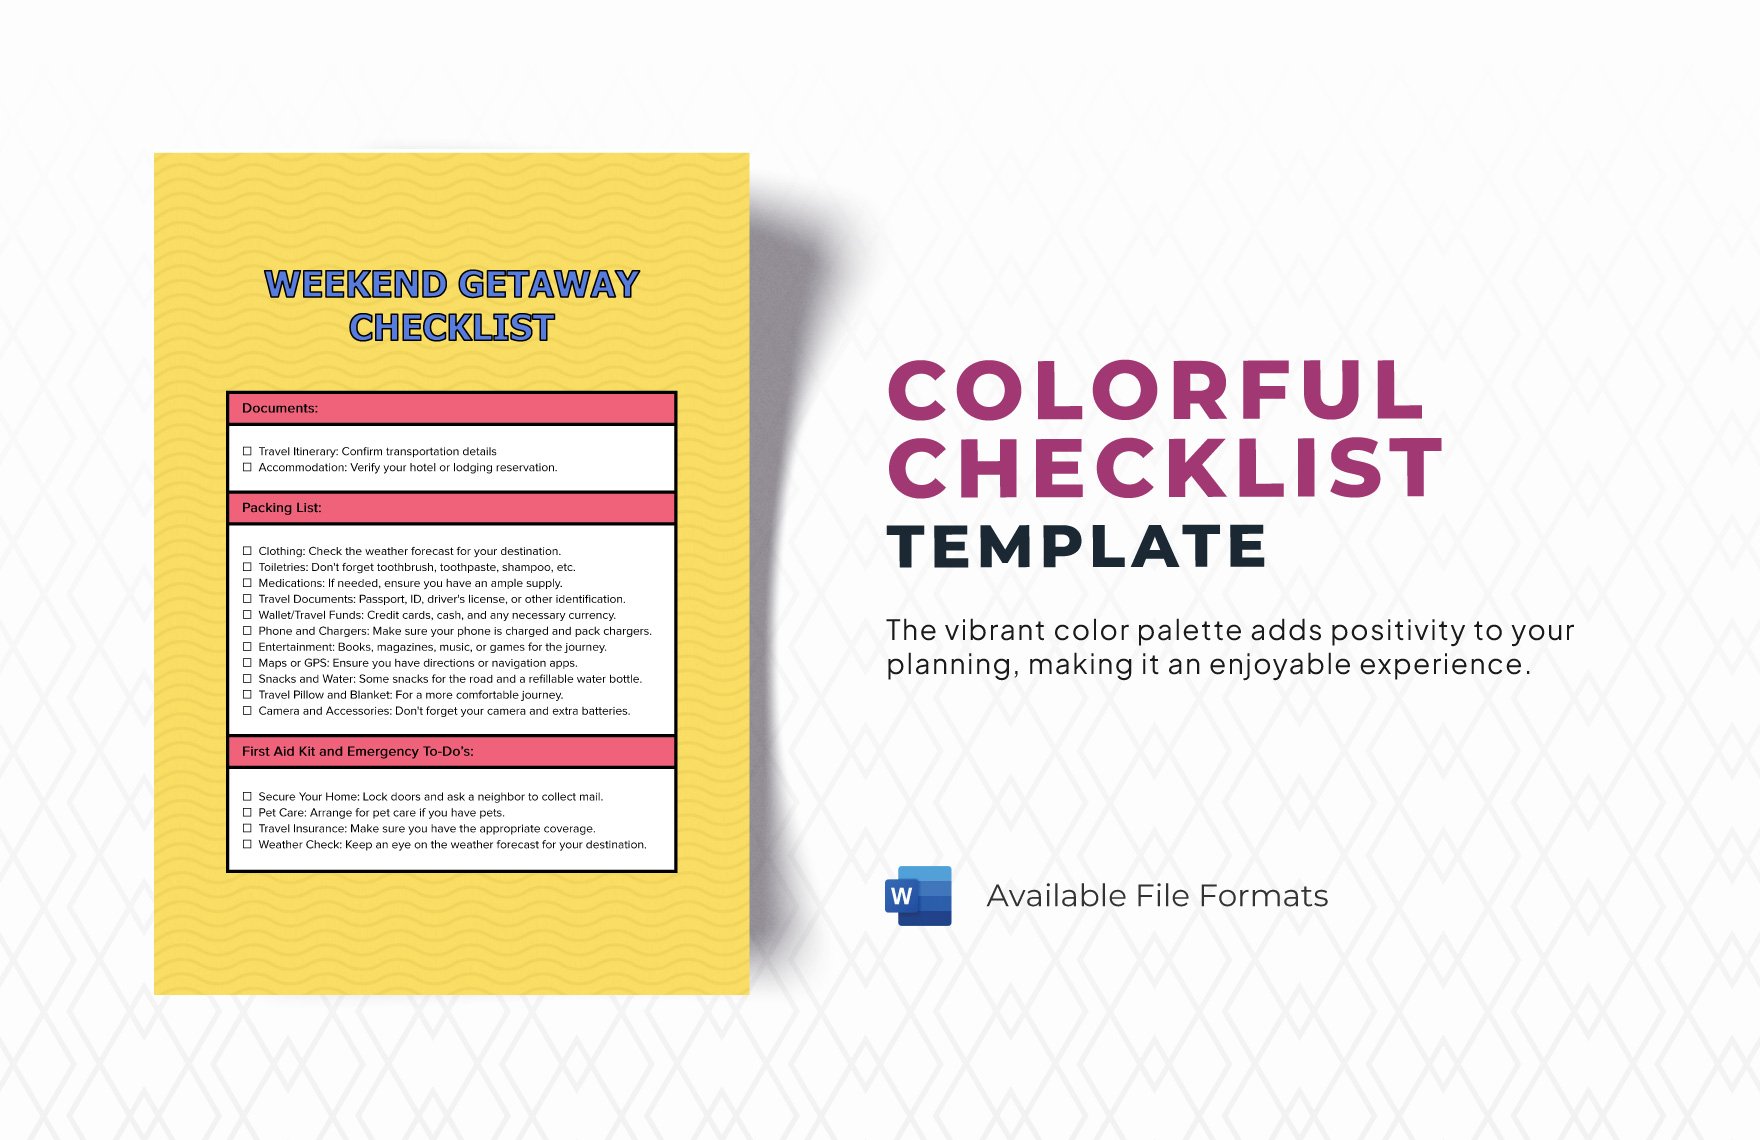 Colorful Checklist Template